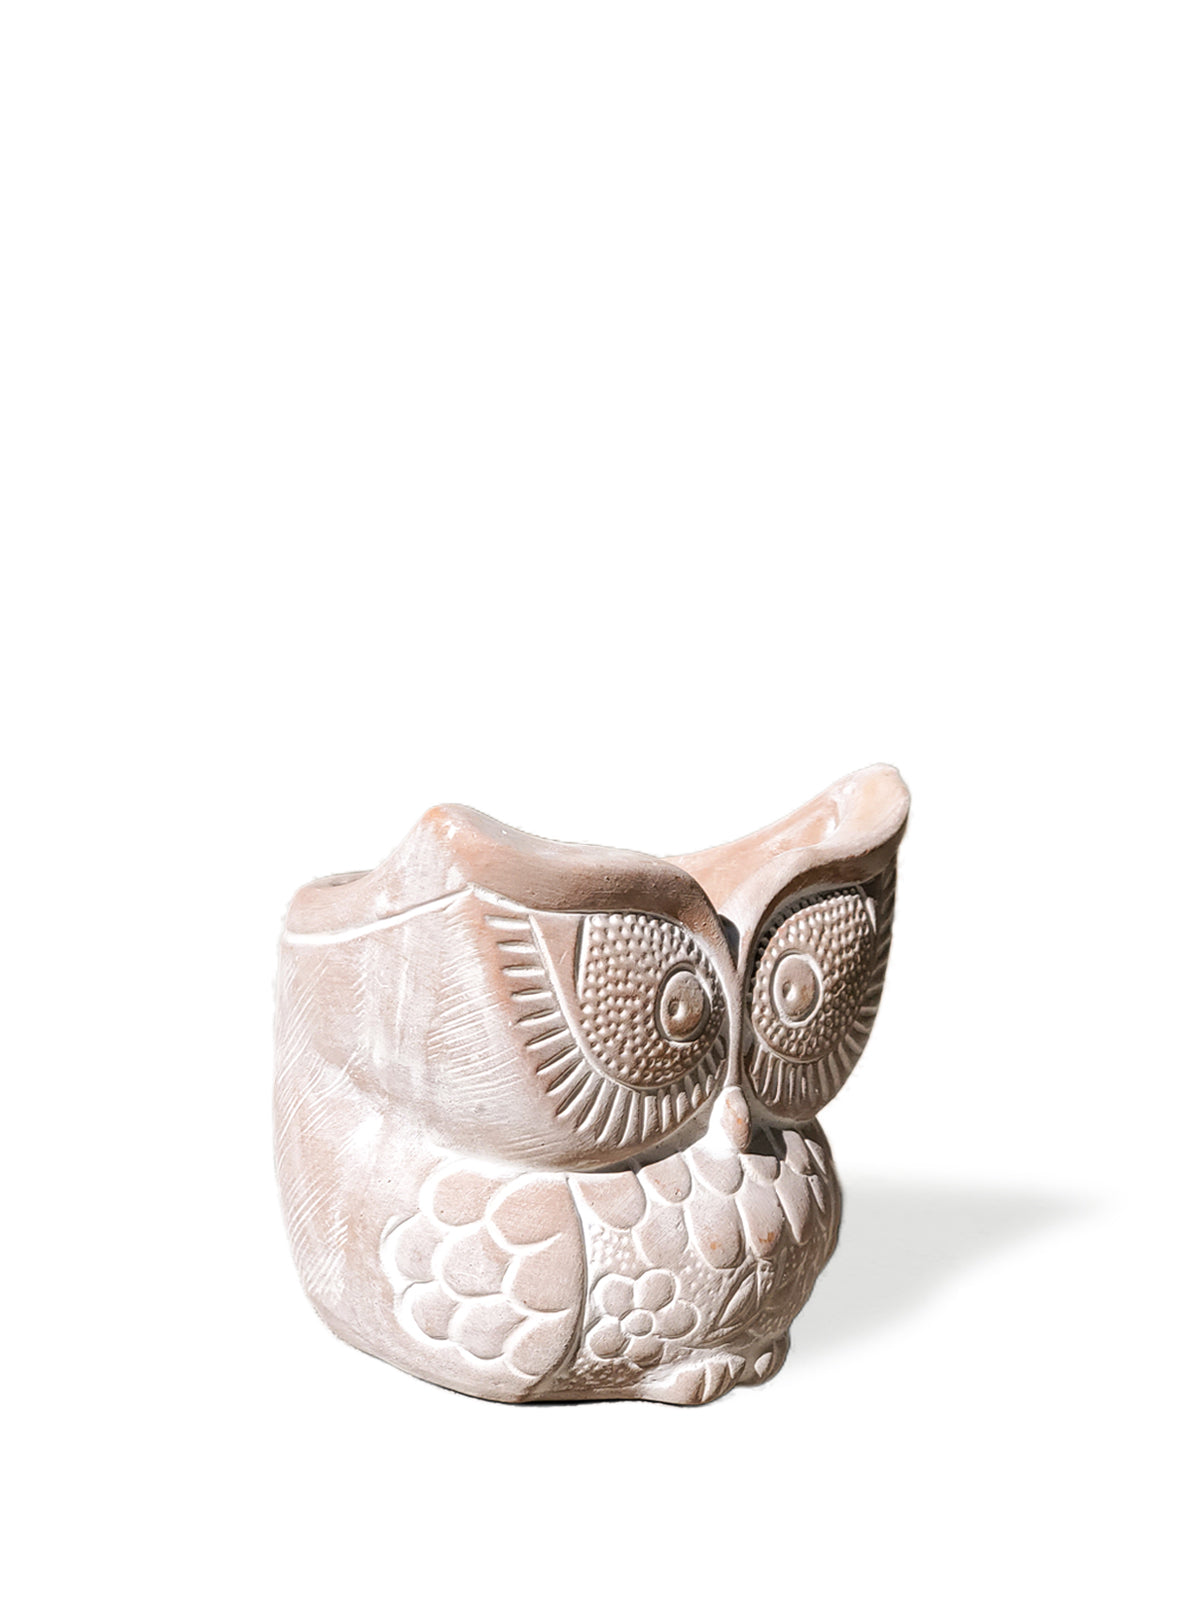 Big Eye Owl Terracotta Pot